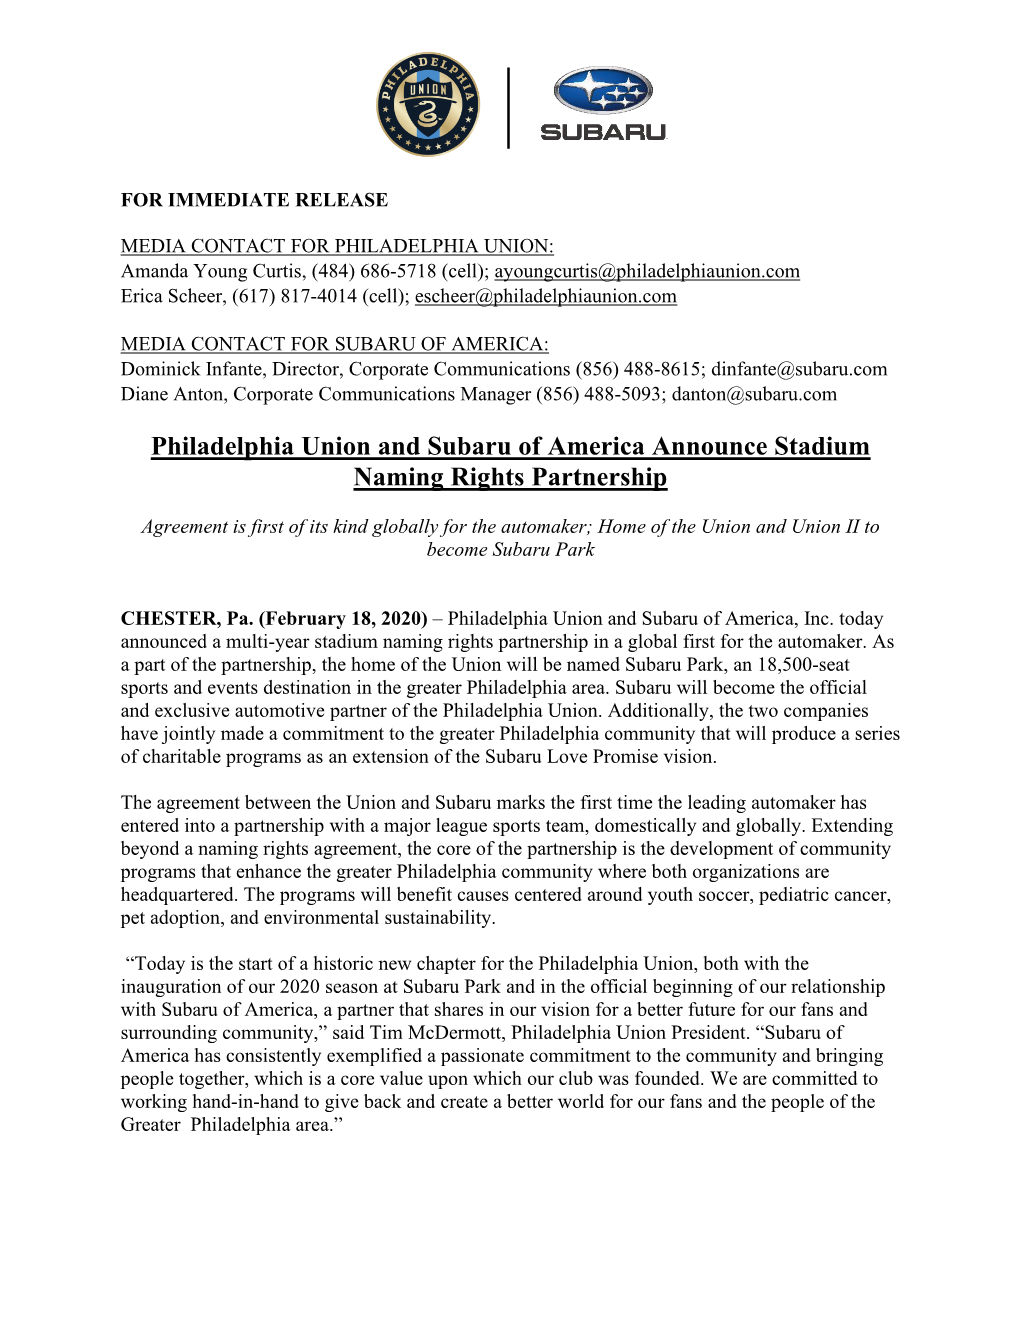 Philadelphia Union and Subaru of America Announce Stadium Naming Rights Partnership